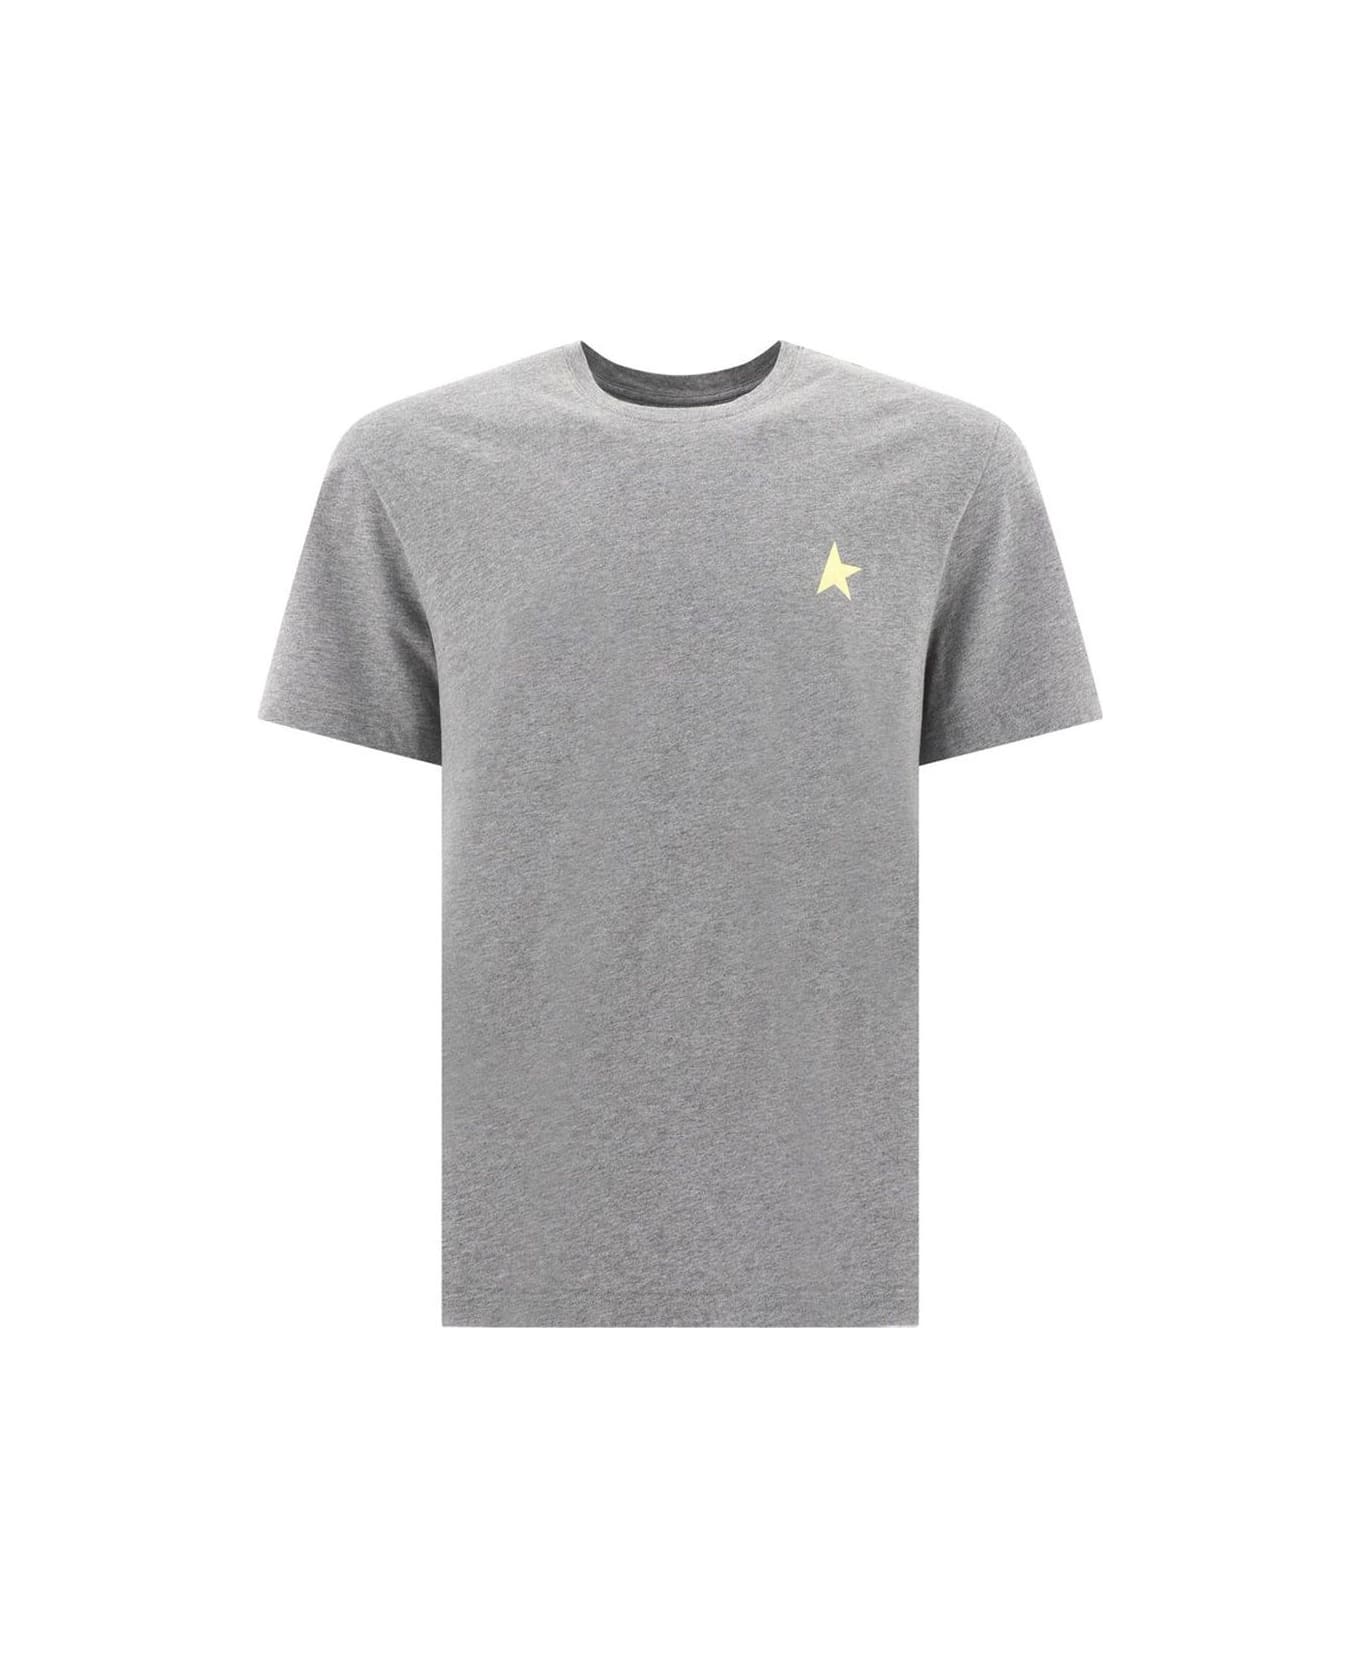 Golden Goose Star T-shirt - Grigio シャツ